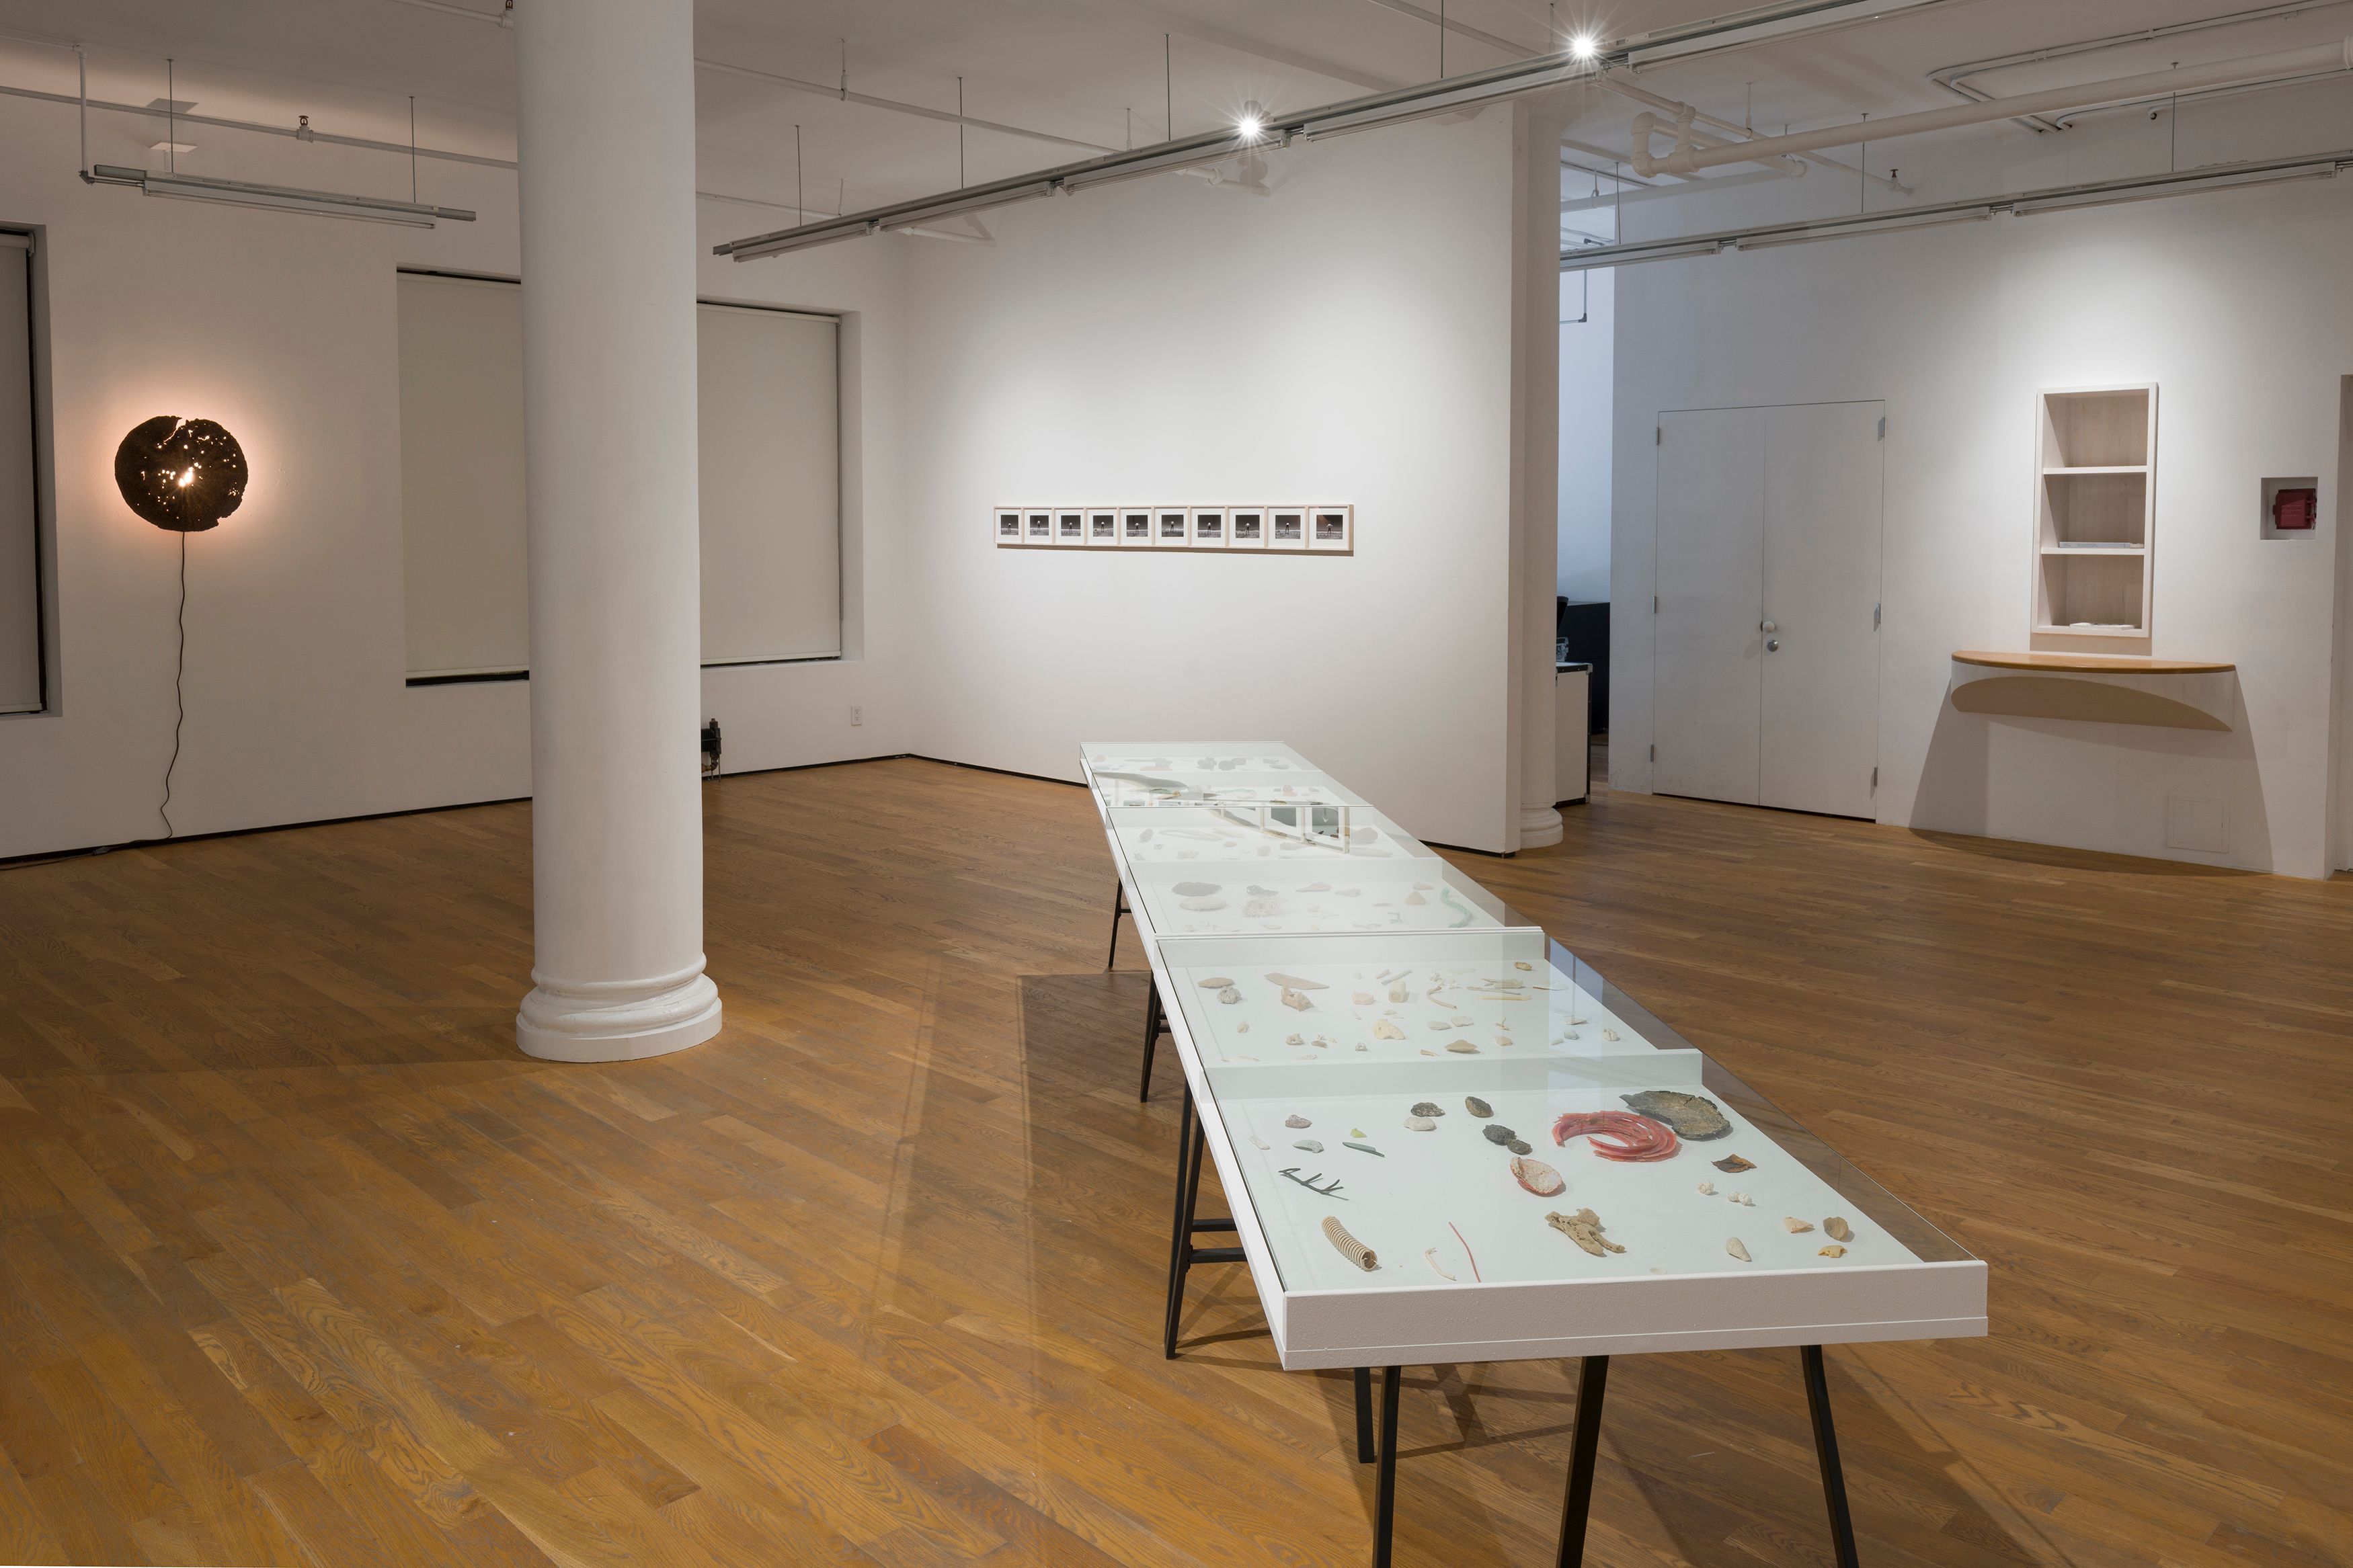 Rafal Bujnowski, Lamp Black Love Story, 2022, installation view, Foxy Production, New York